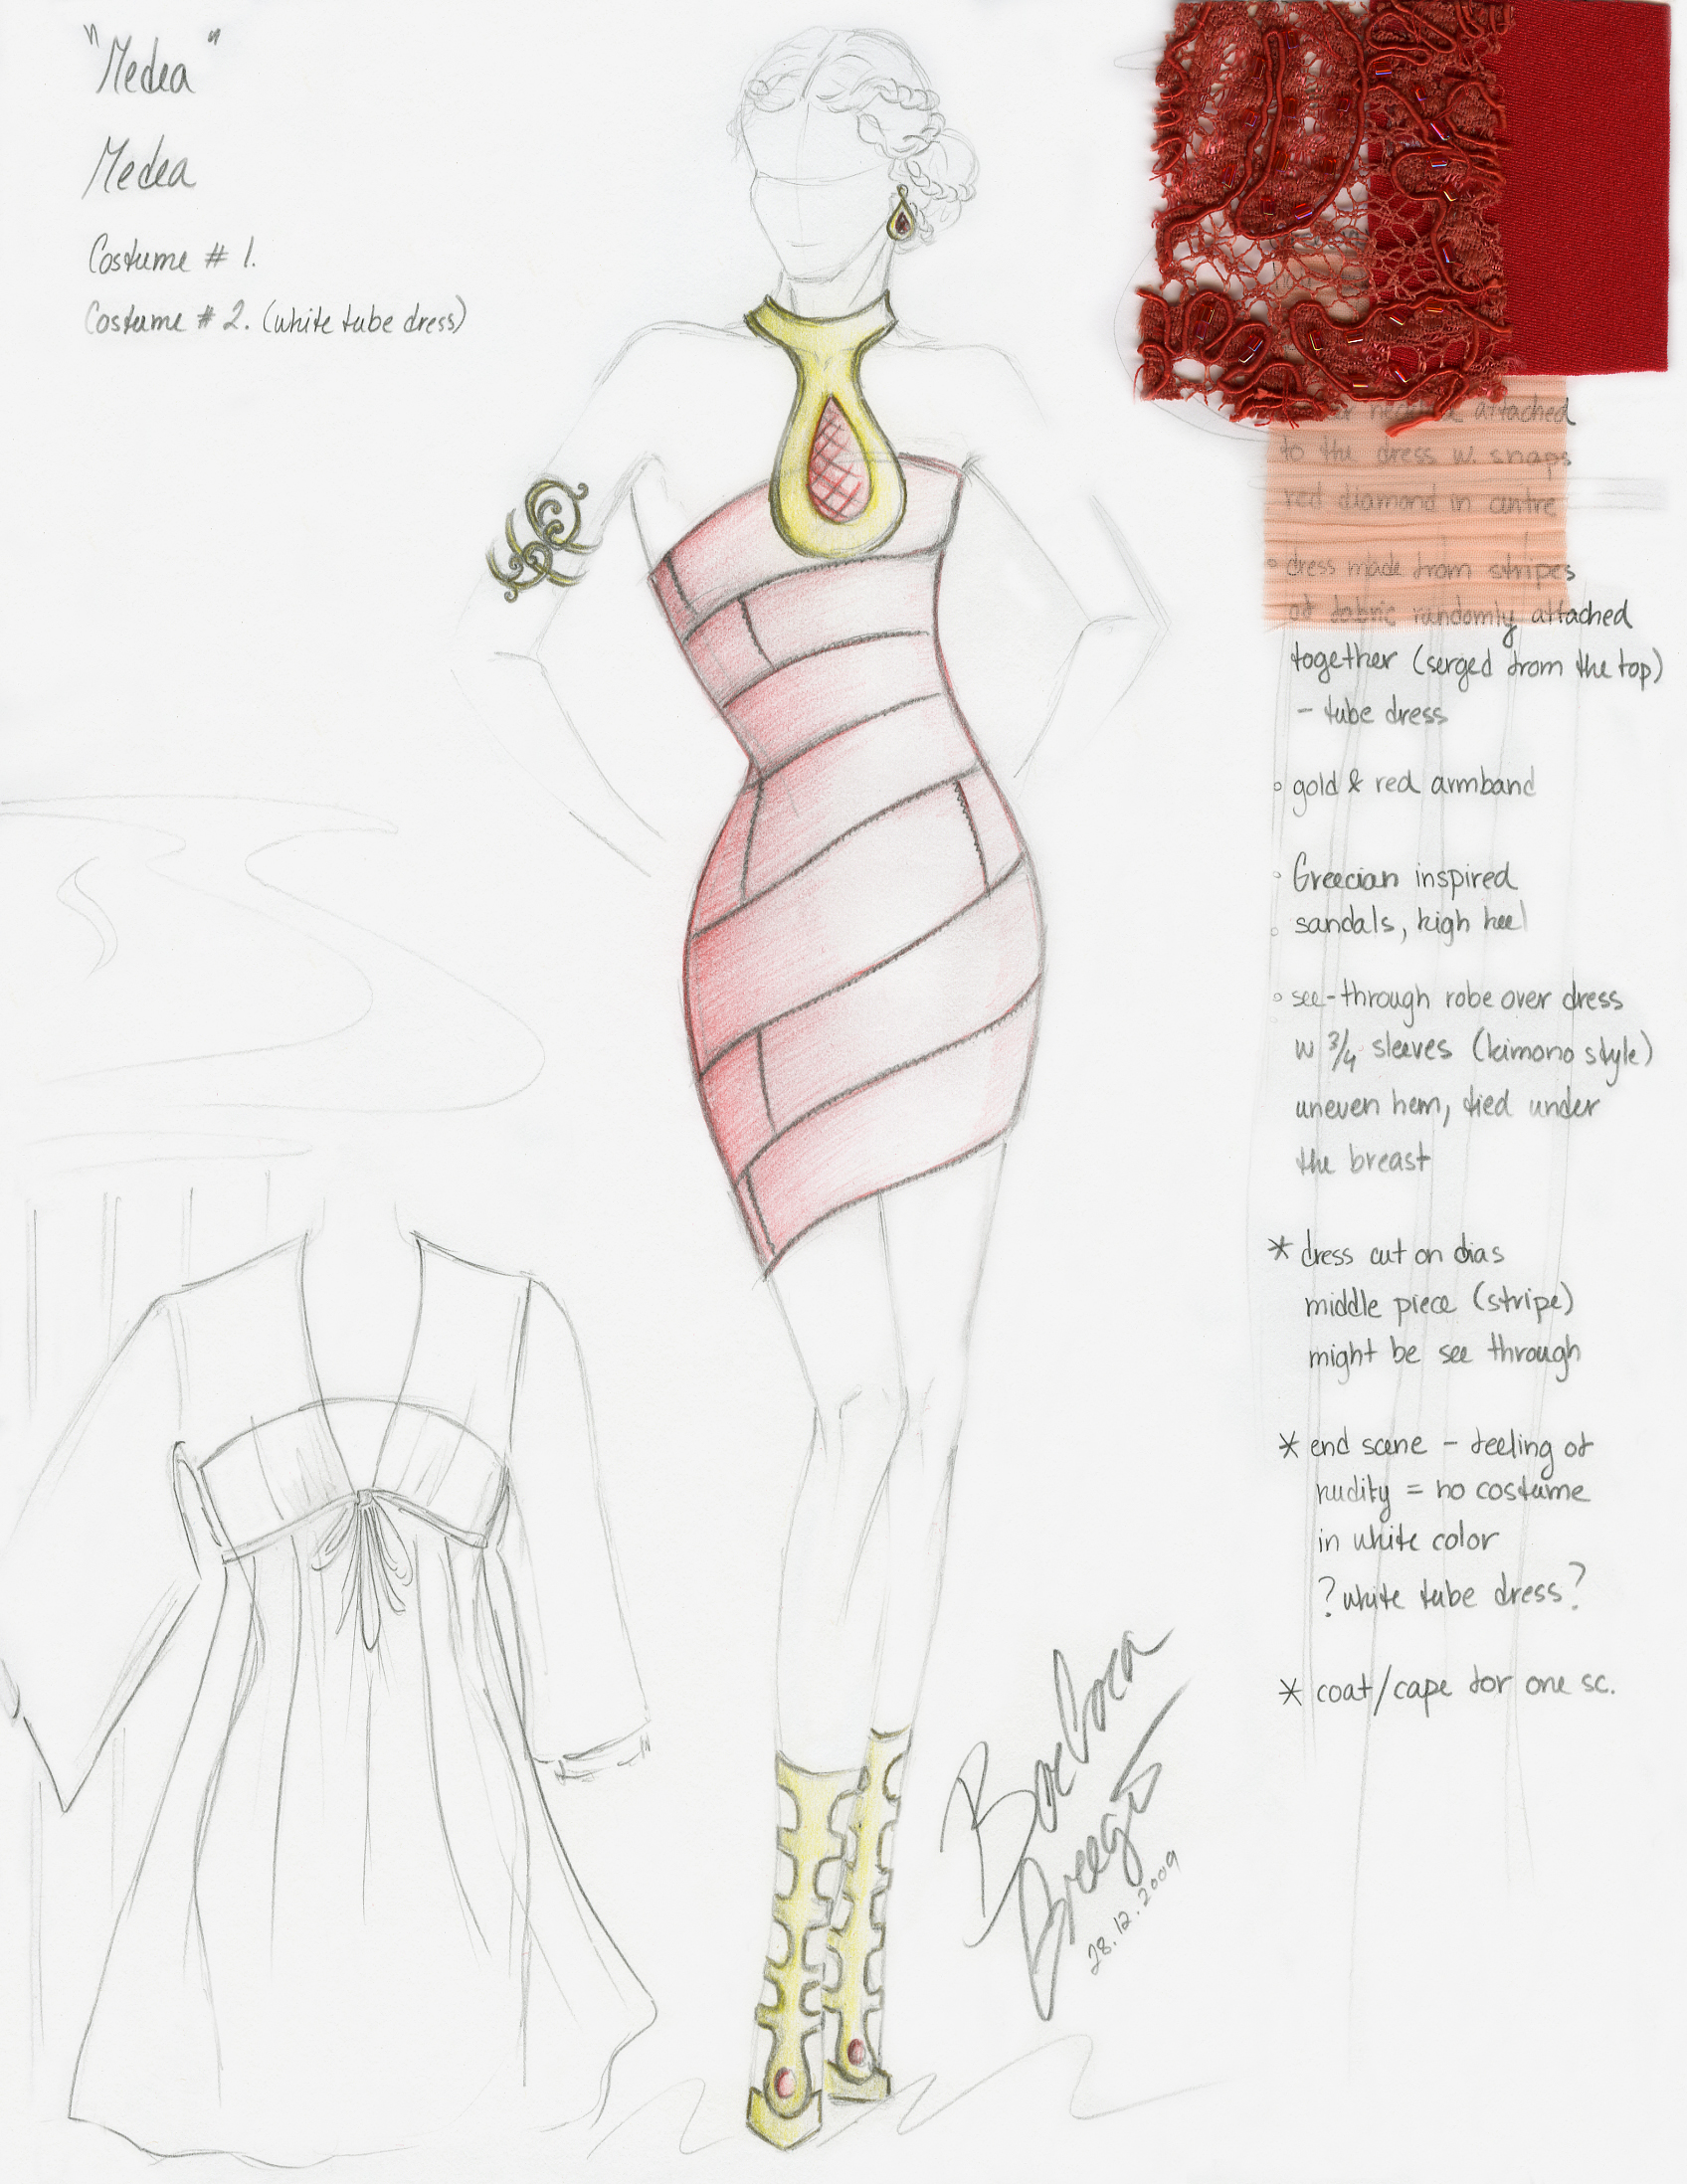 Costume Design Sketch for Medea in 